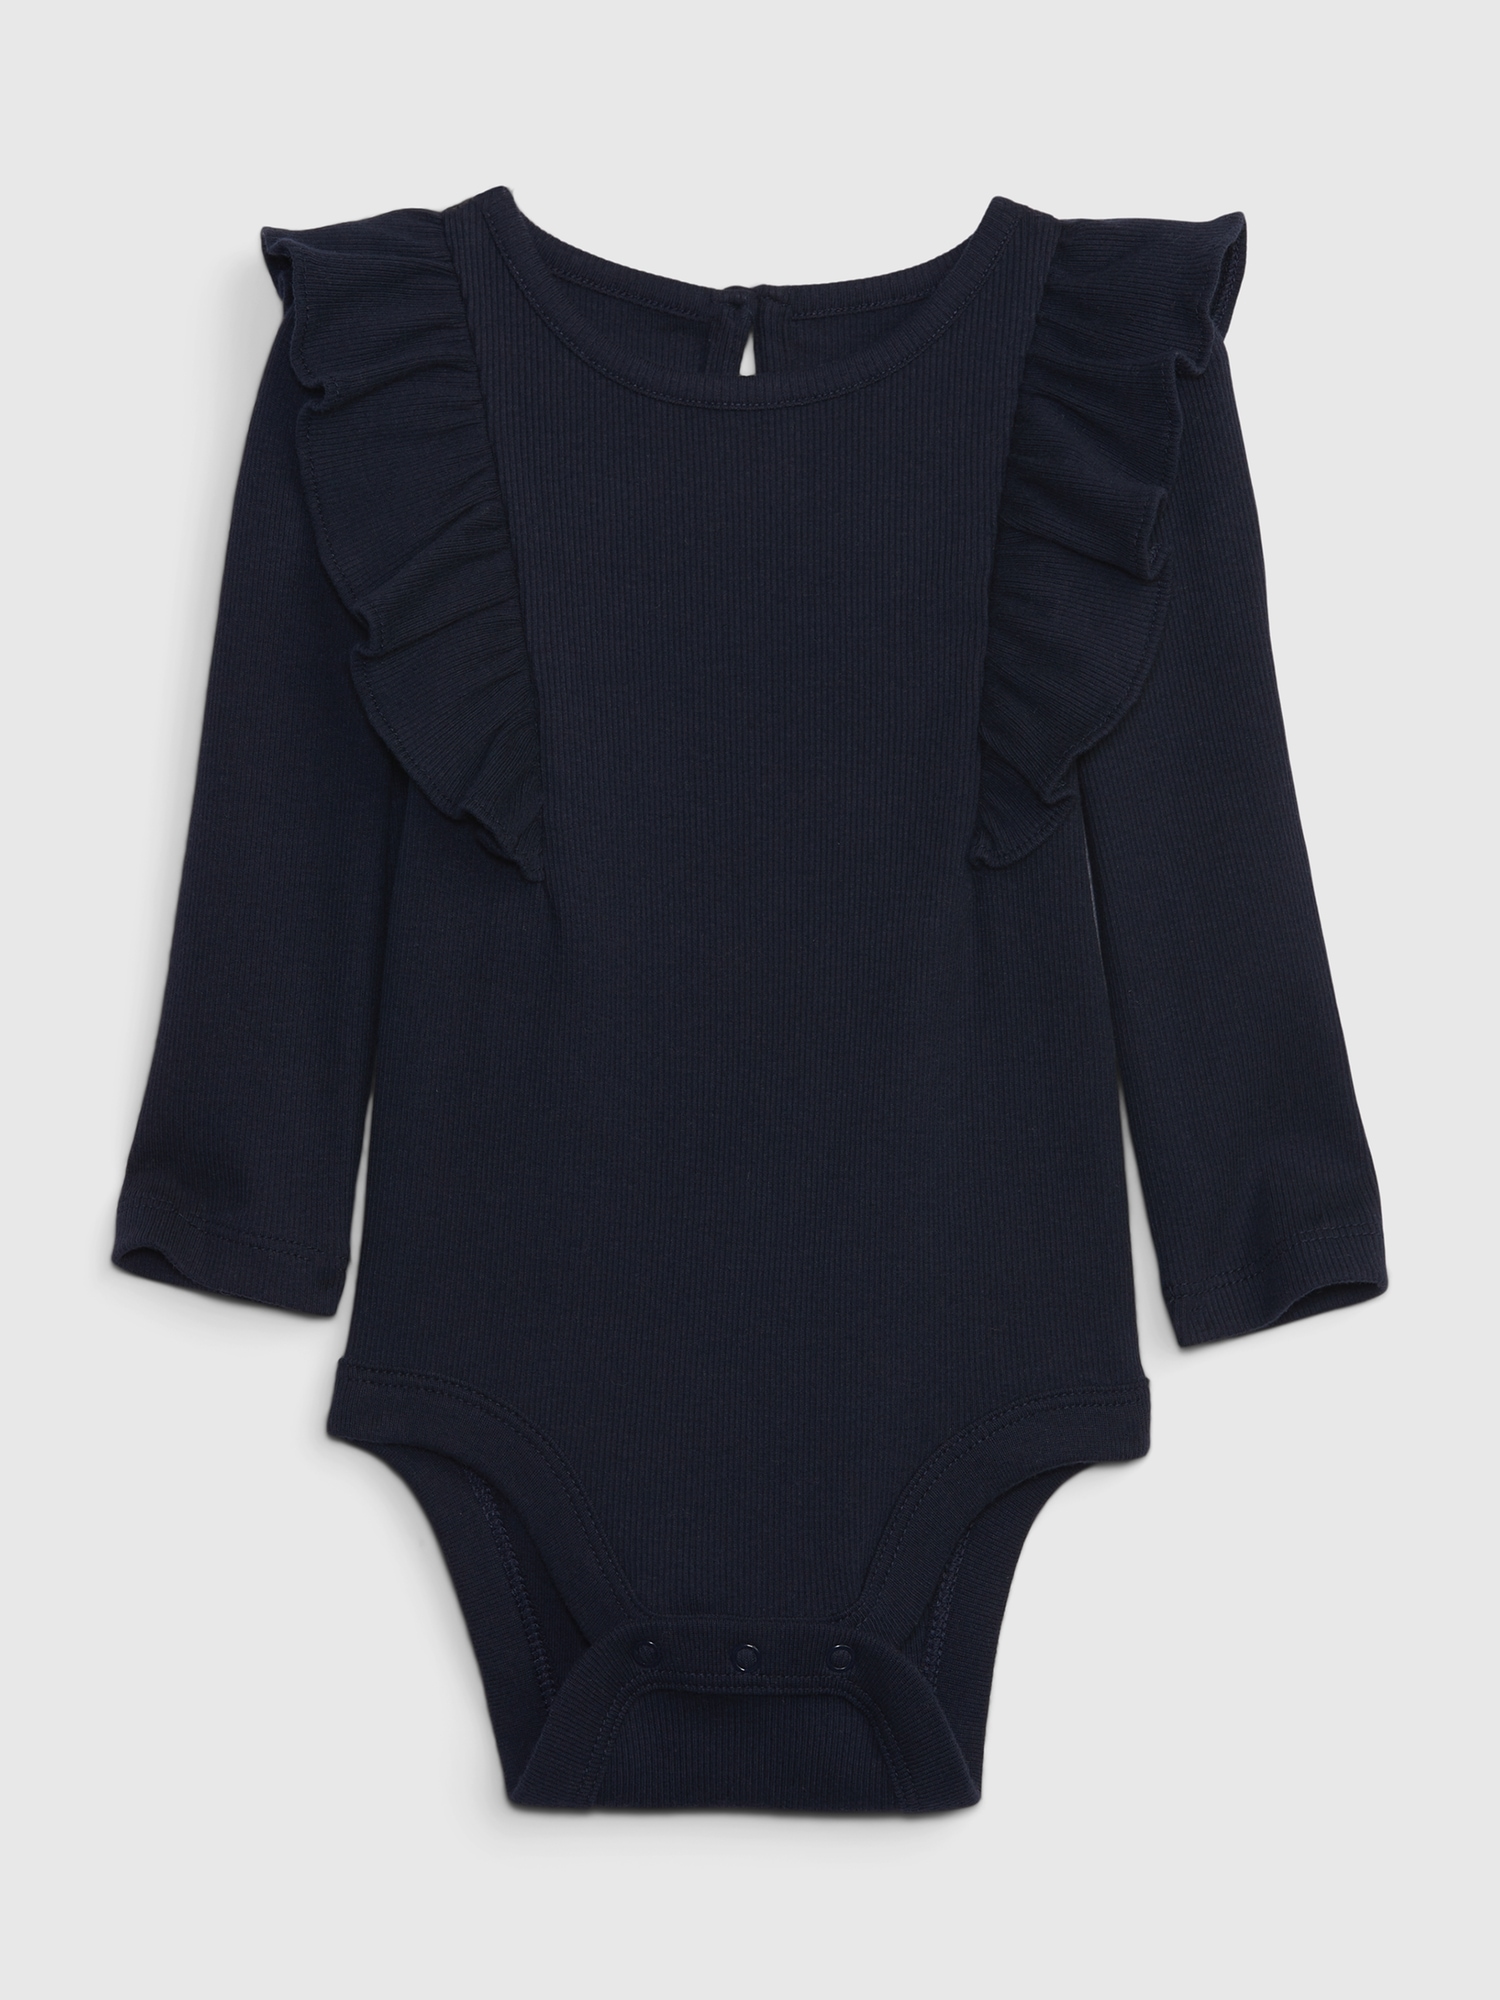 Baby Mix and Match Ruffle Bodysuit | Gap